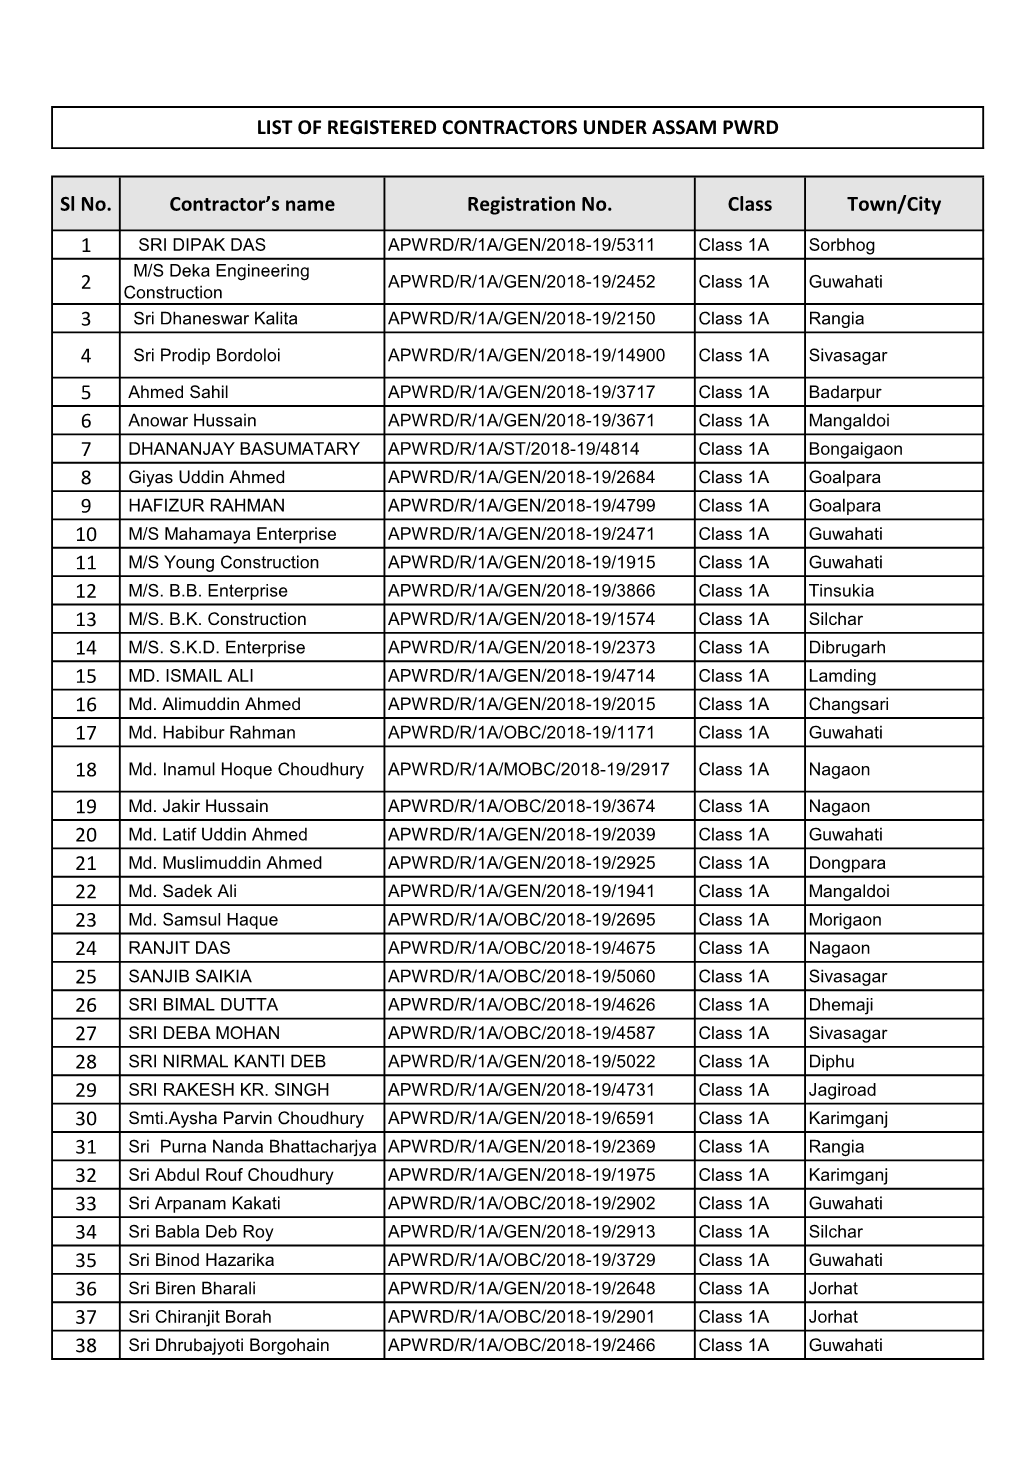 List of Registered Contractors Under Assam PWRD in 2018-19